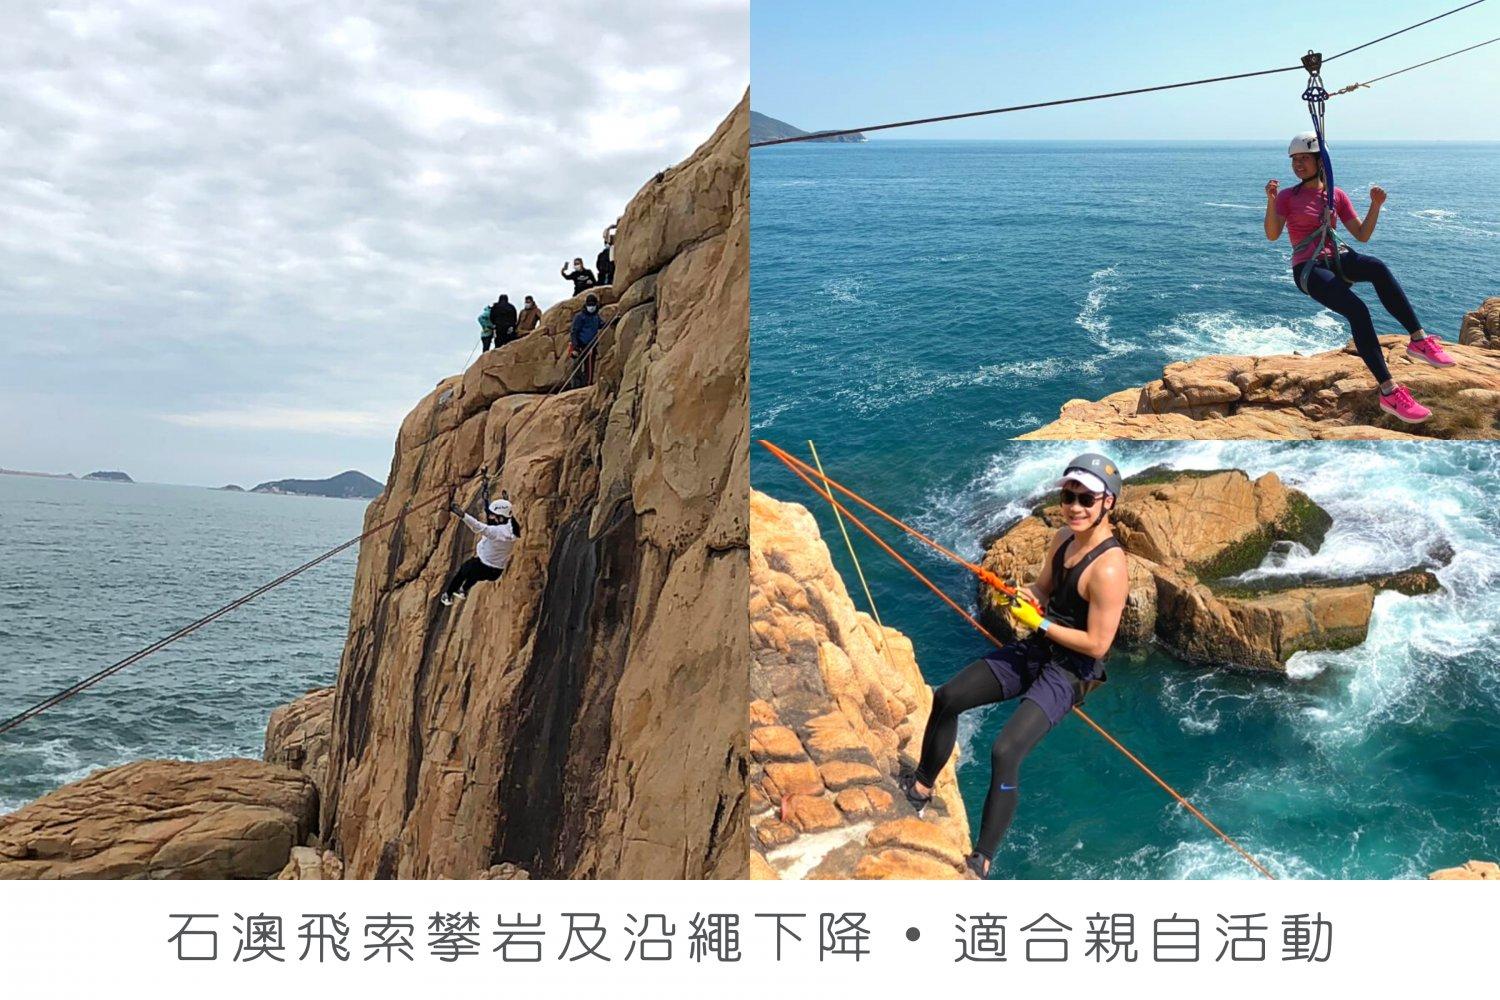 Explorer Hong Kong 【石澳】親子團 - 飛索、攀岩及沿繩下降 1